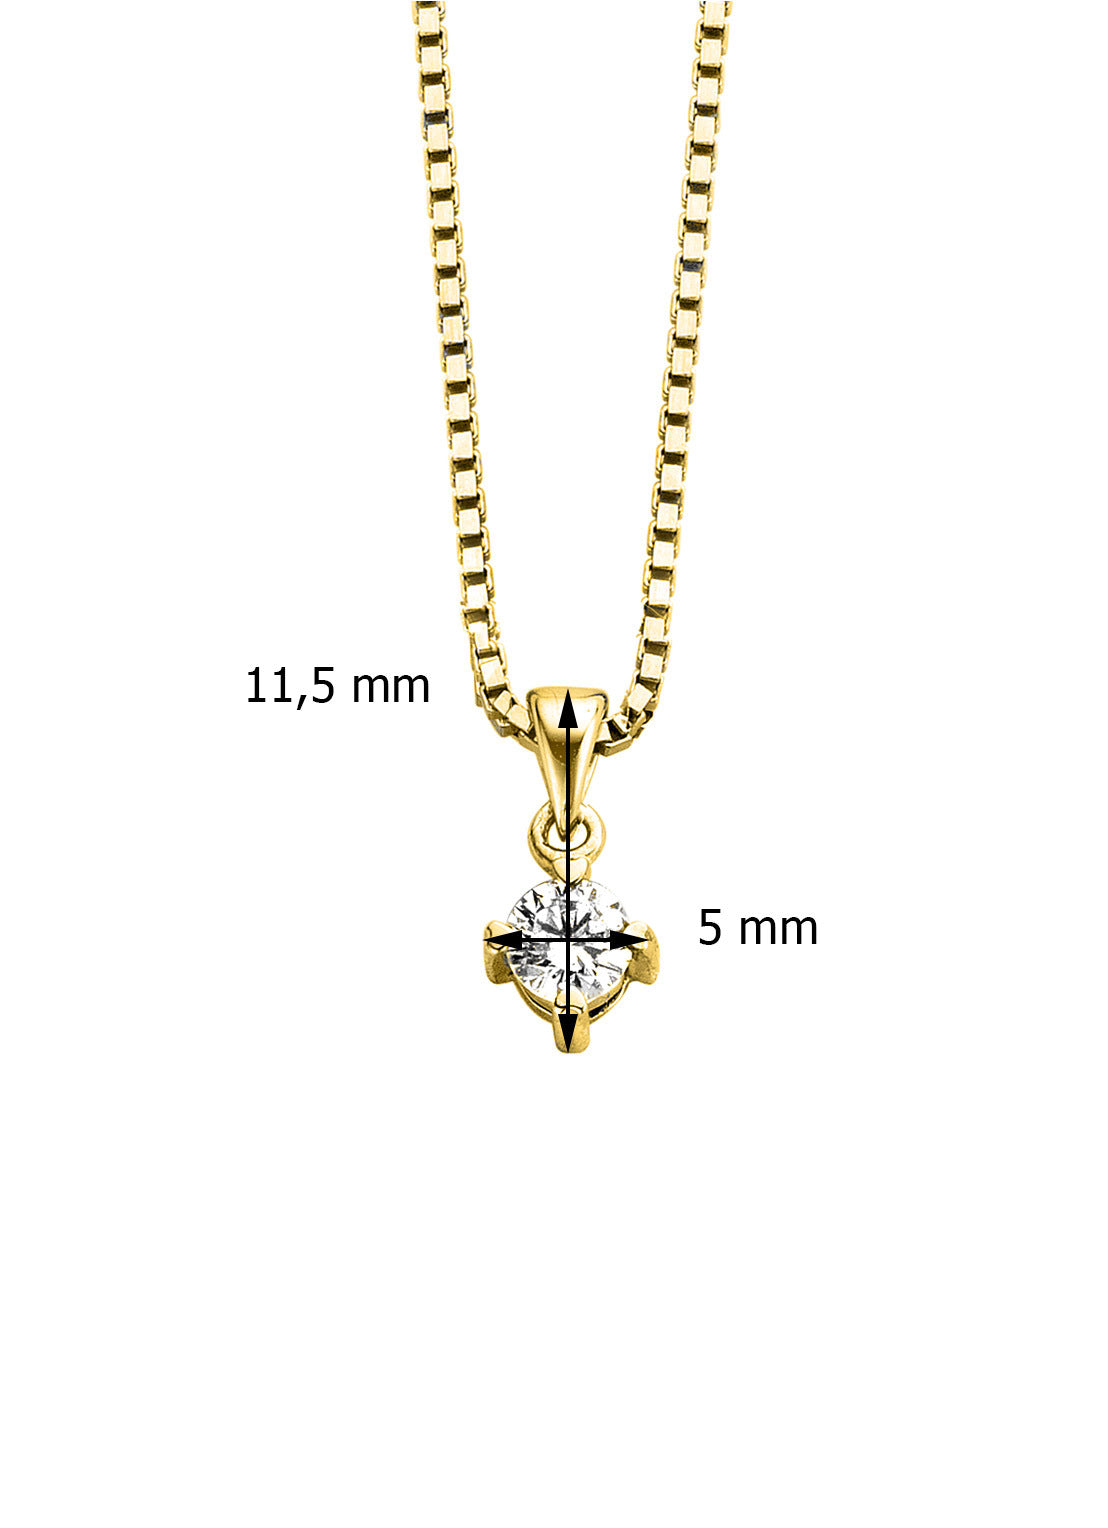 Yellow gold pendant, 0.20 ct diamond, Hearts & Arrows